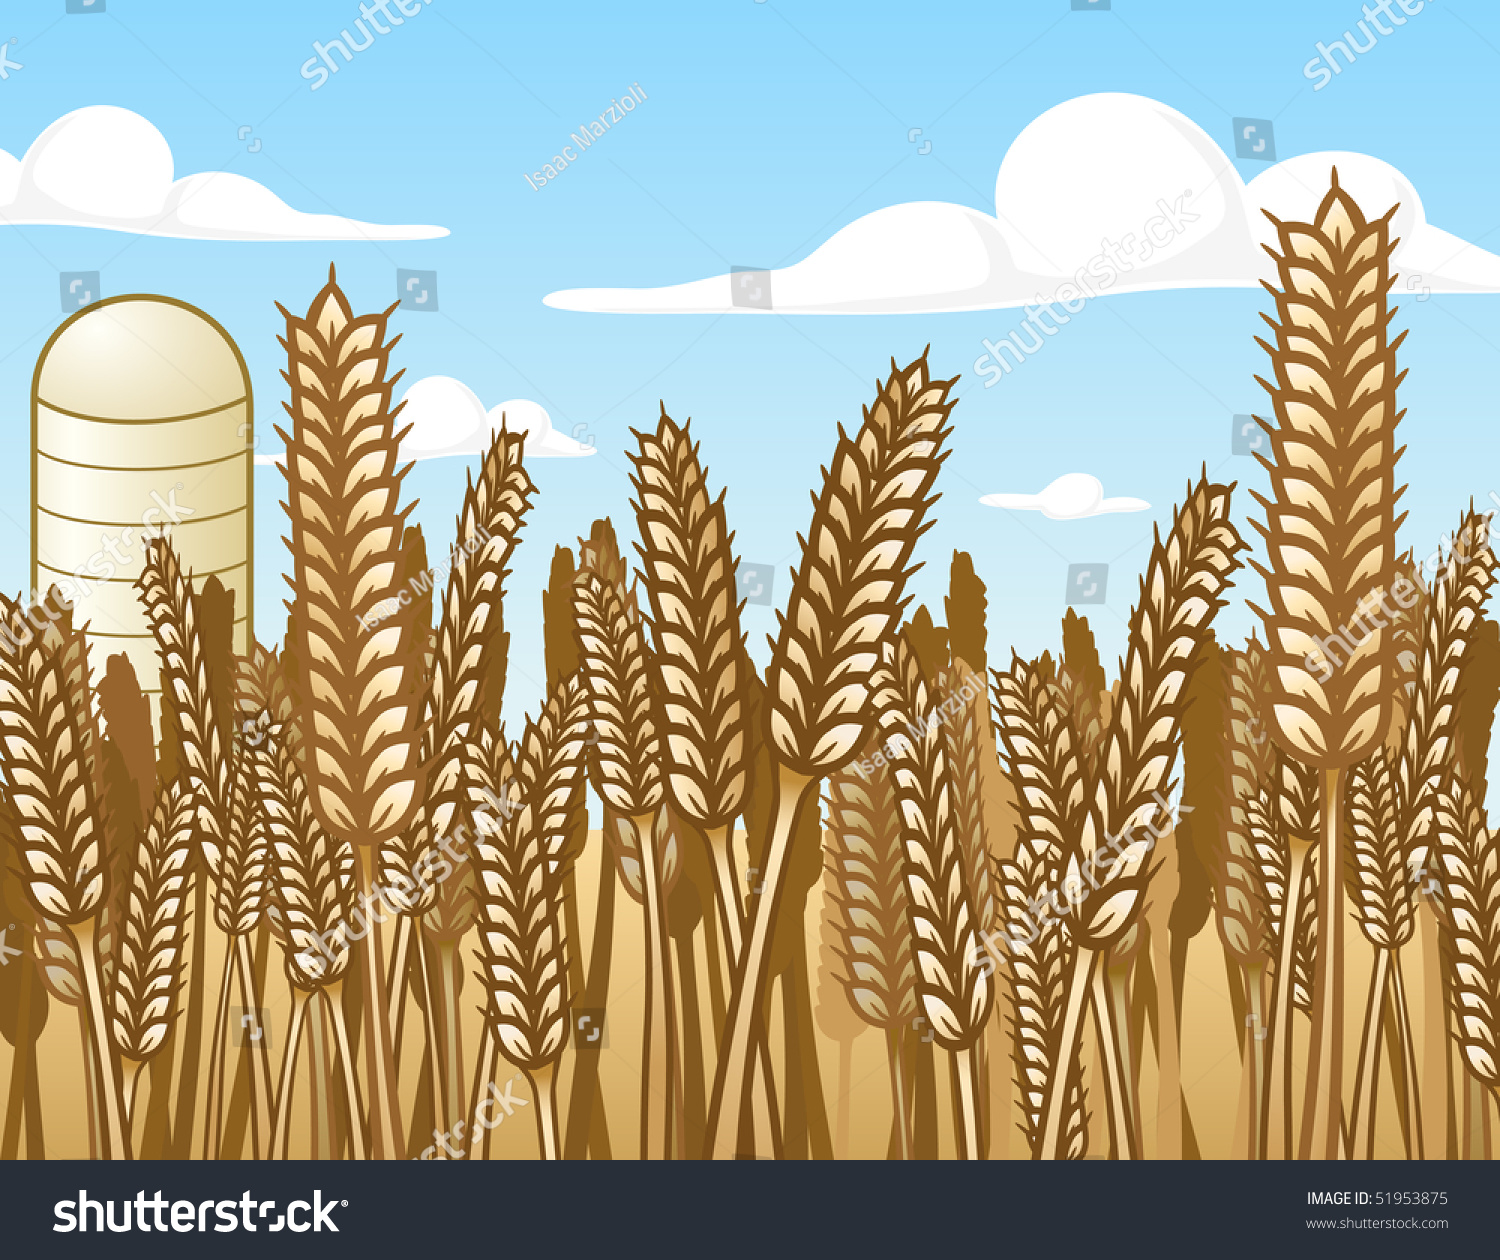 Wheat Field - Vector Illustration - 51953875 : Shutterstock